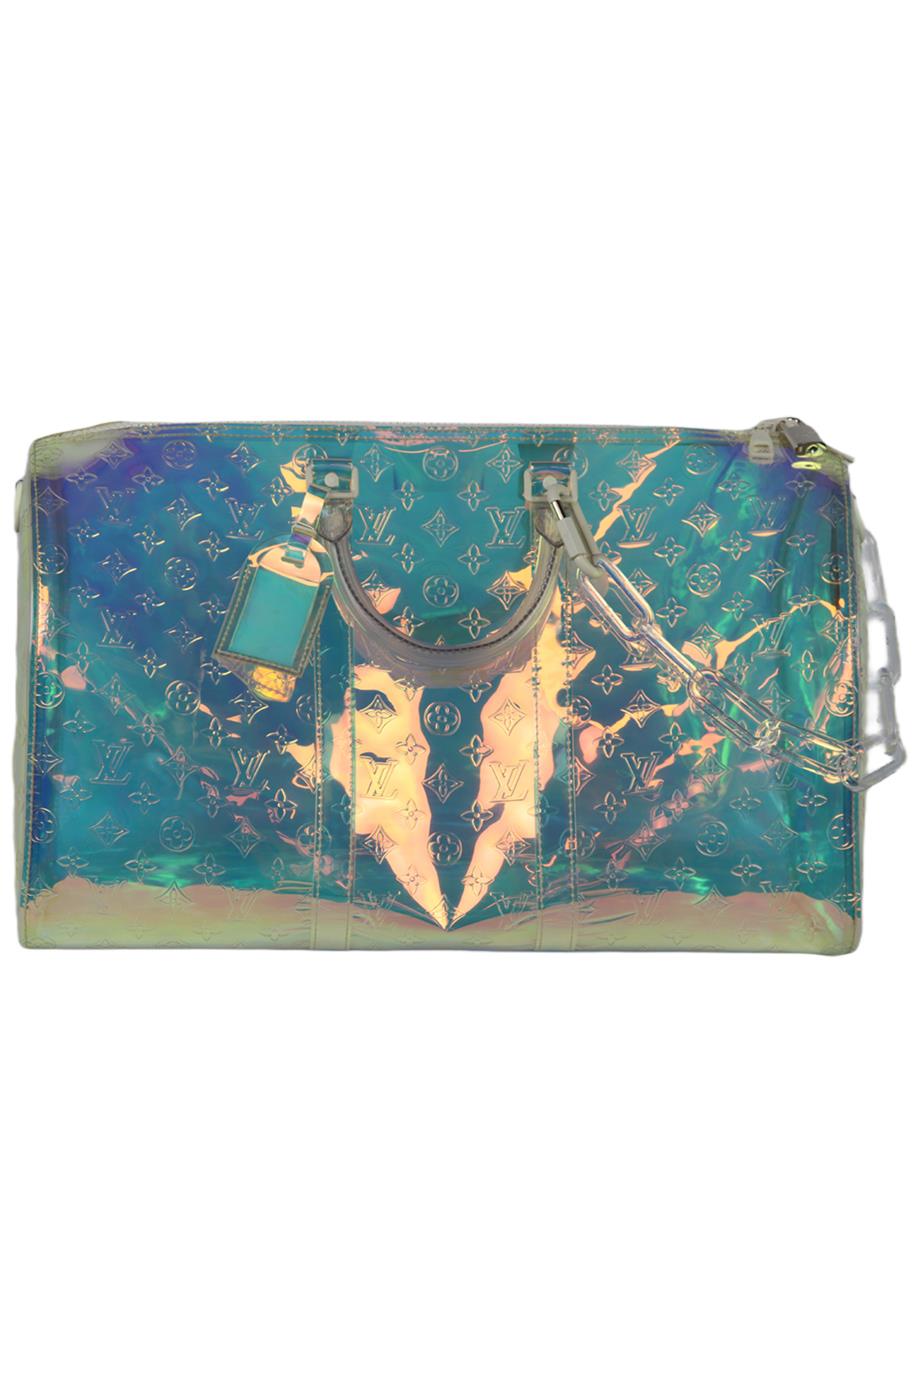 Louis Vuitton Keepall Bandouliere Bag Limited Edition Monogram Prism PVC 50  Clear 448221